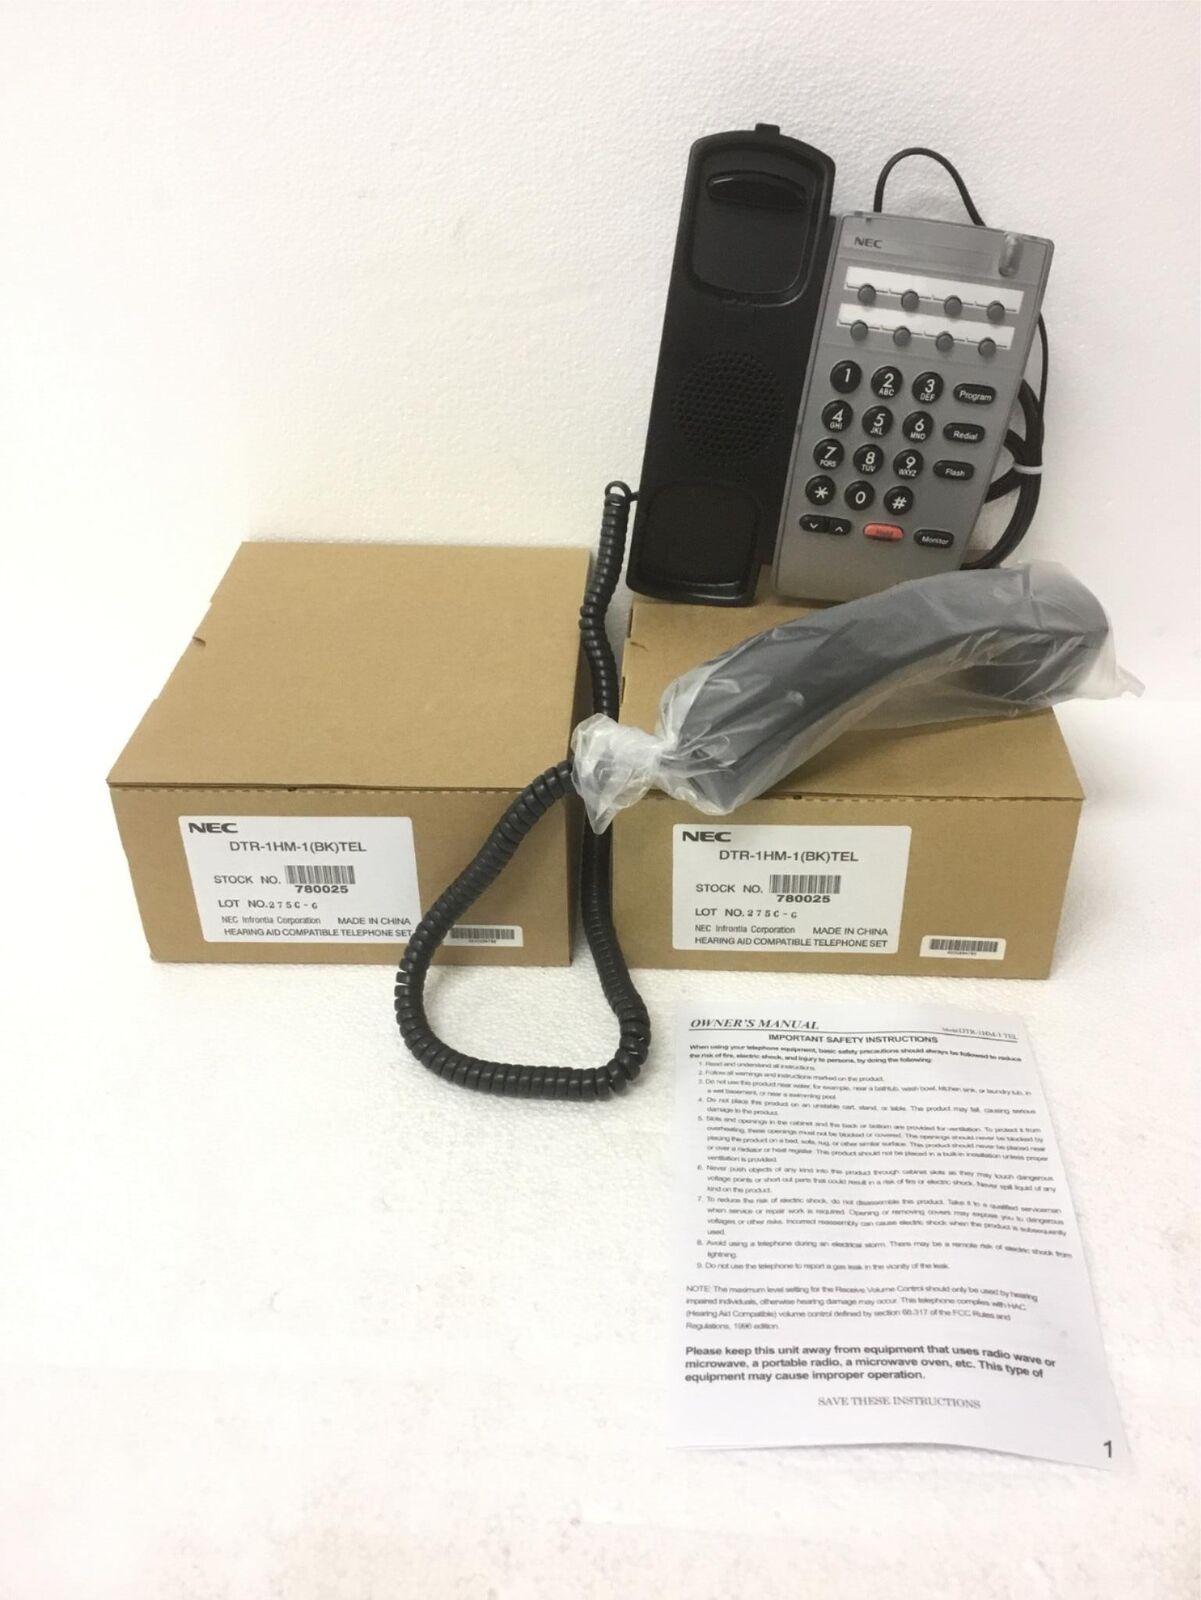 2x NEW NEC Infrontia DTR-1HM-1(Bk)Tel Hearing Aid Compatible Phone w/Handset QTY